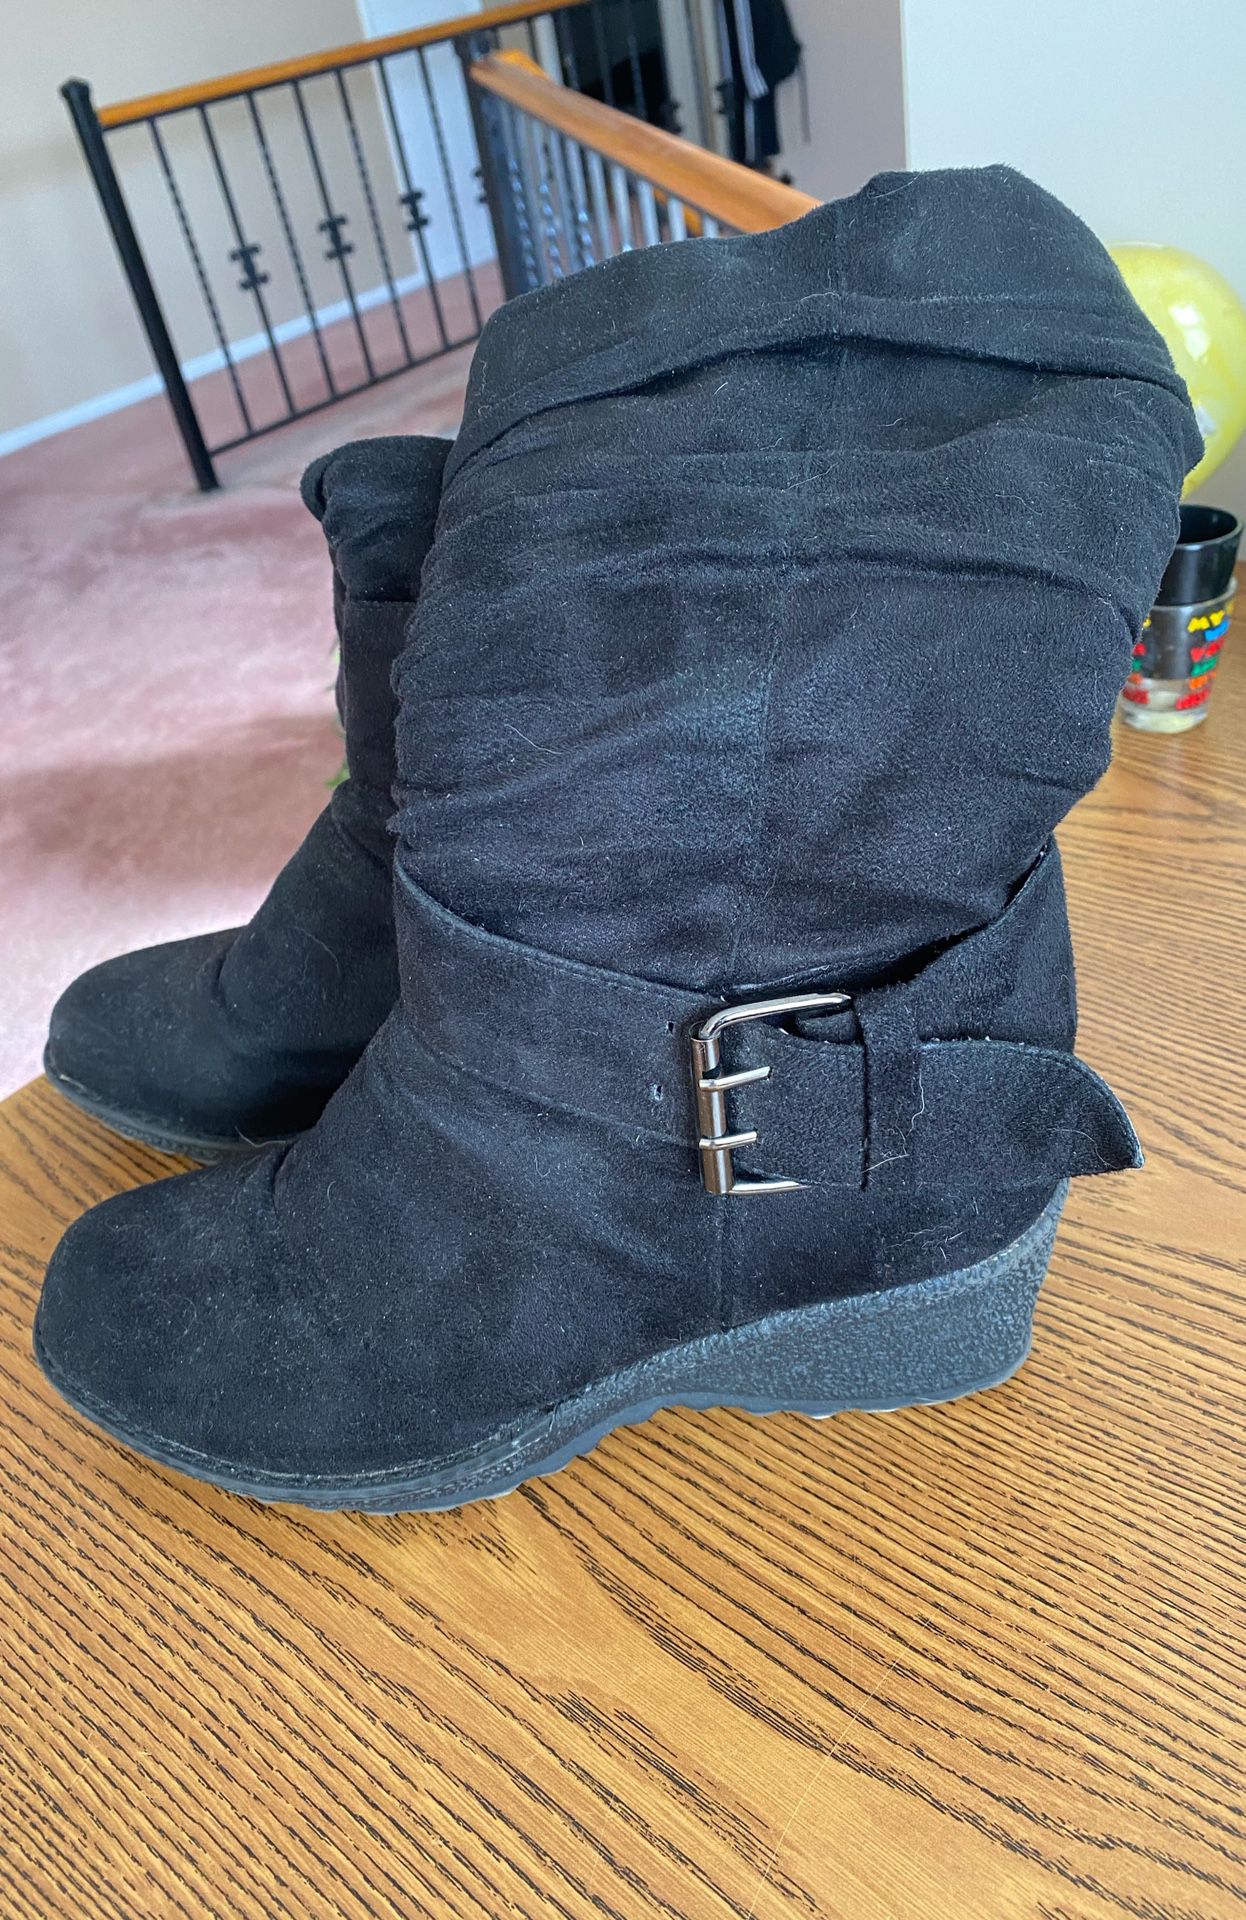 Ladies size 8-1/2 black suede boots with buckle & platform heel, worn once, porch pickup Mt Laurel